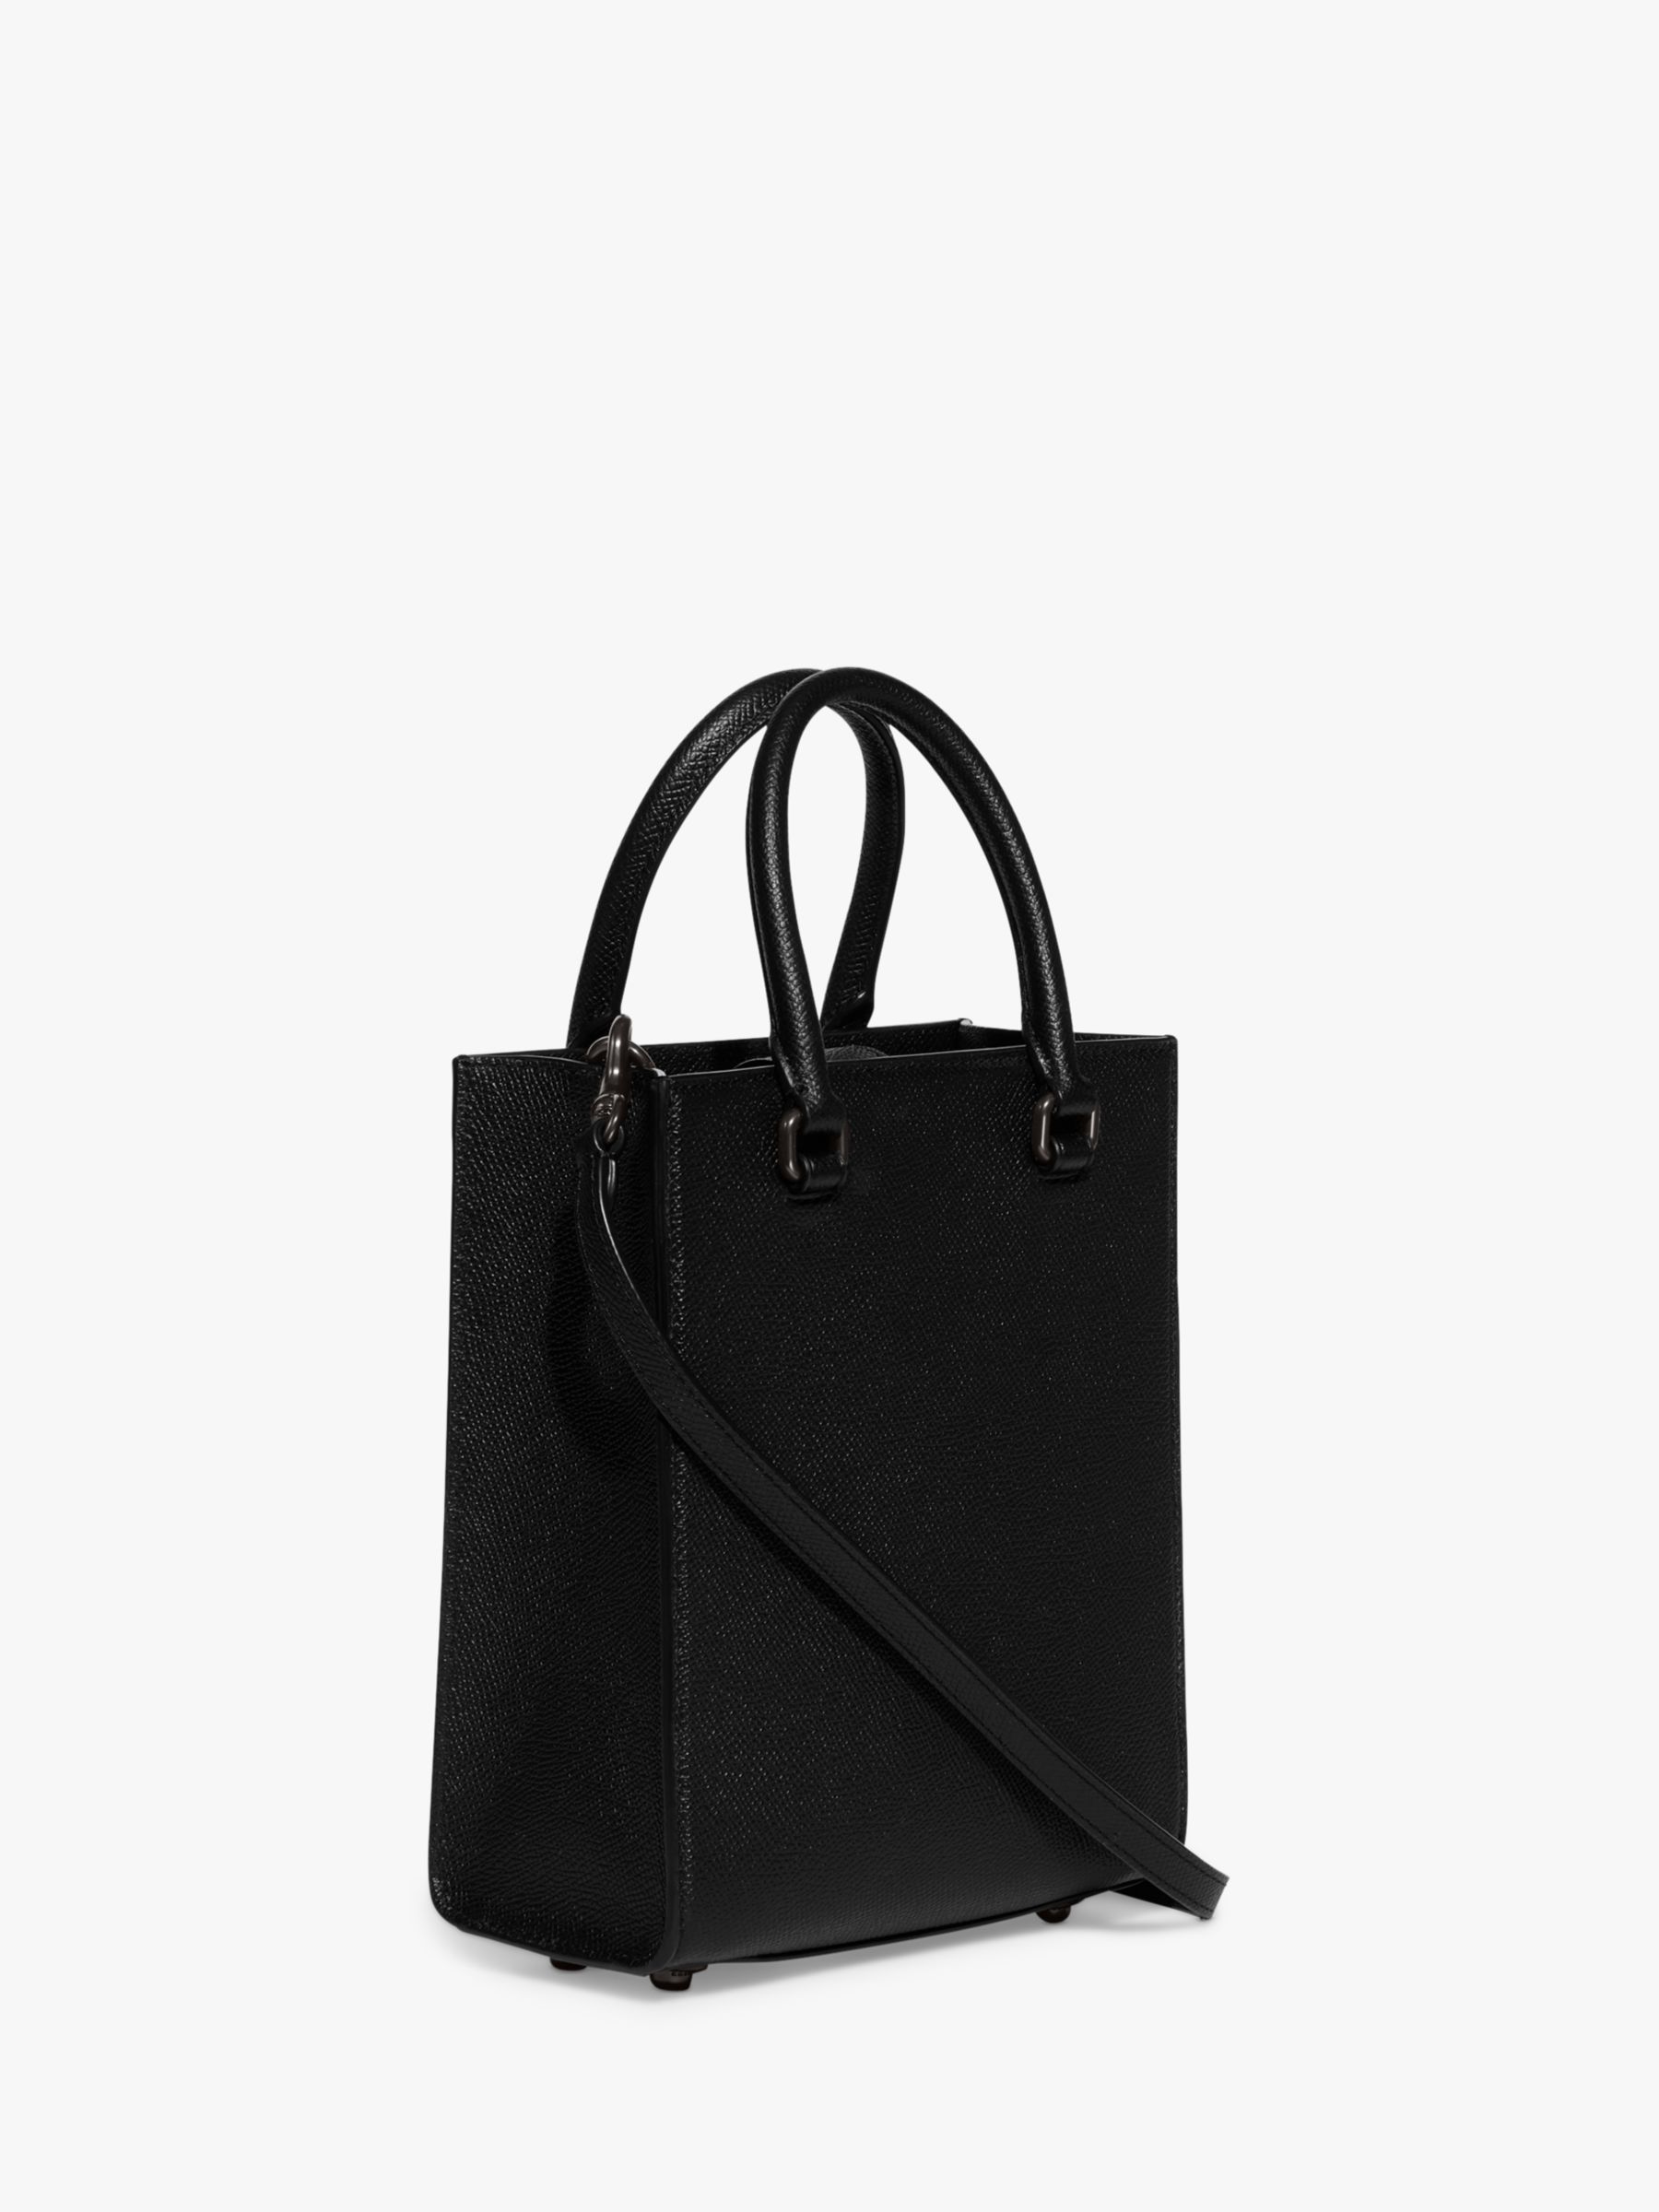 Buy Coach Tote 16 Leather Grab Bag, Black Online at johnlewis.com